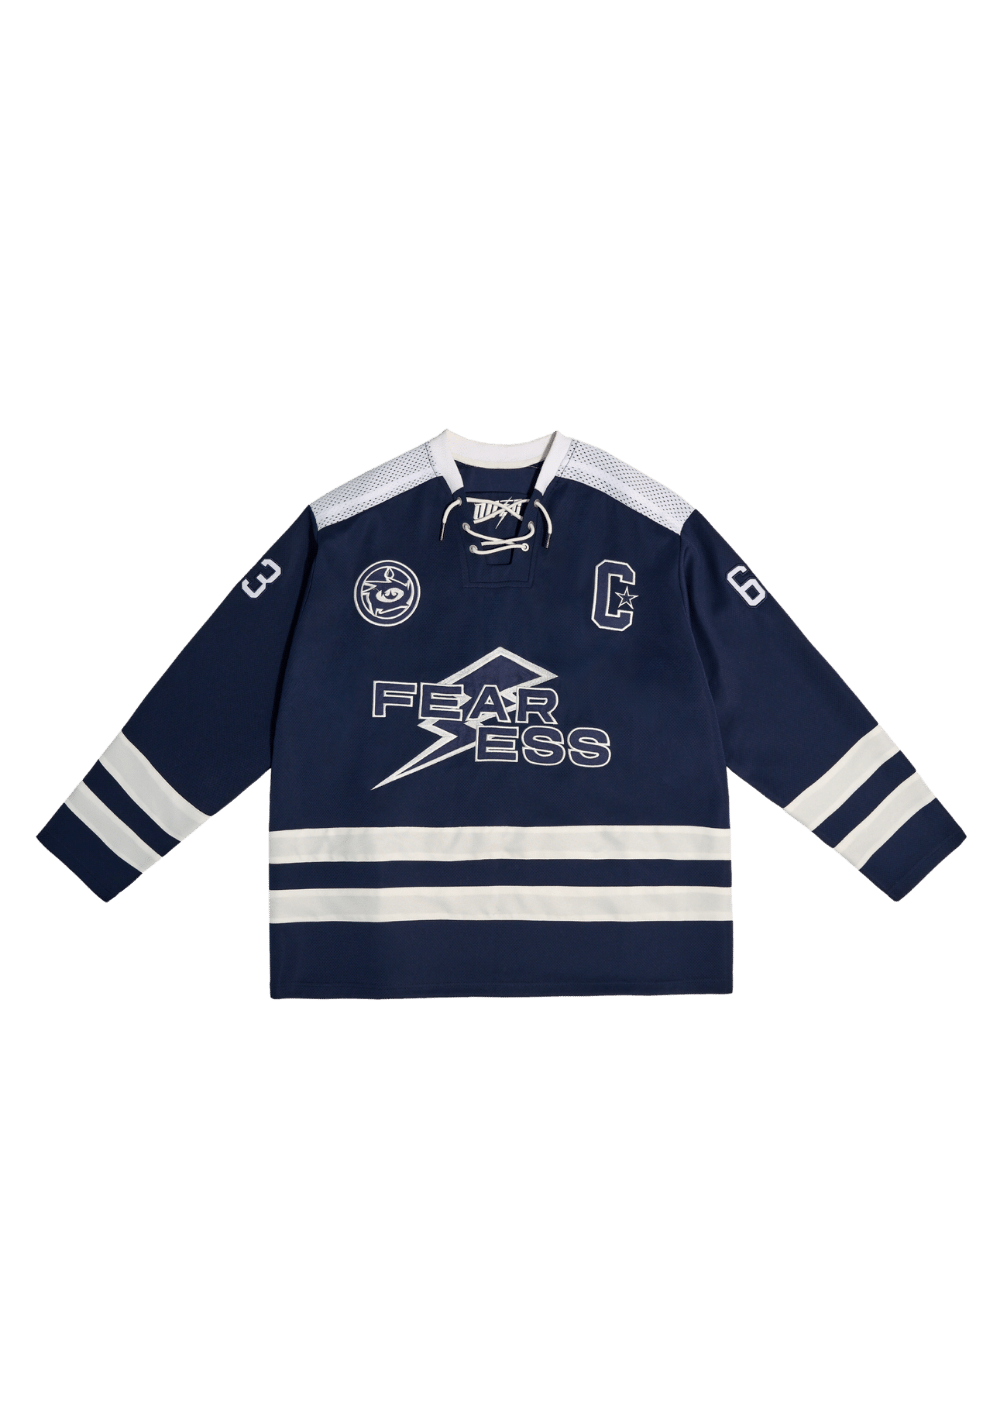 Tsunami Hockey Jersey - PSYLOS 1, Tsunami Hockey Jersey, Shirt, OOTC, PSYLOS 1